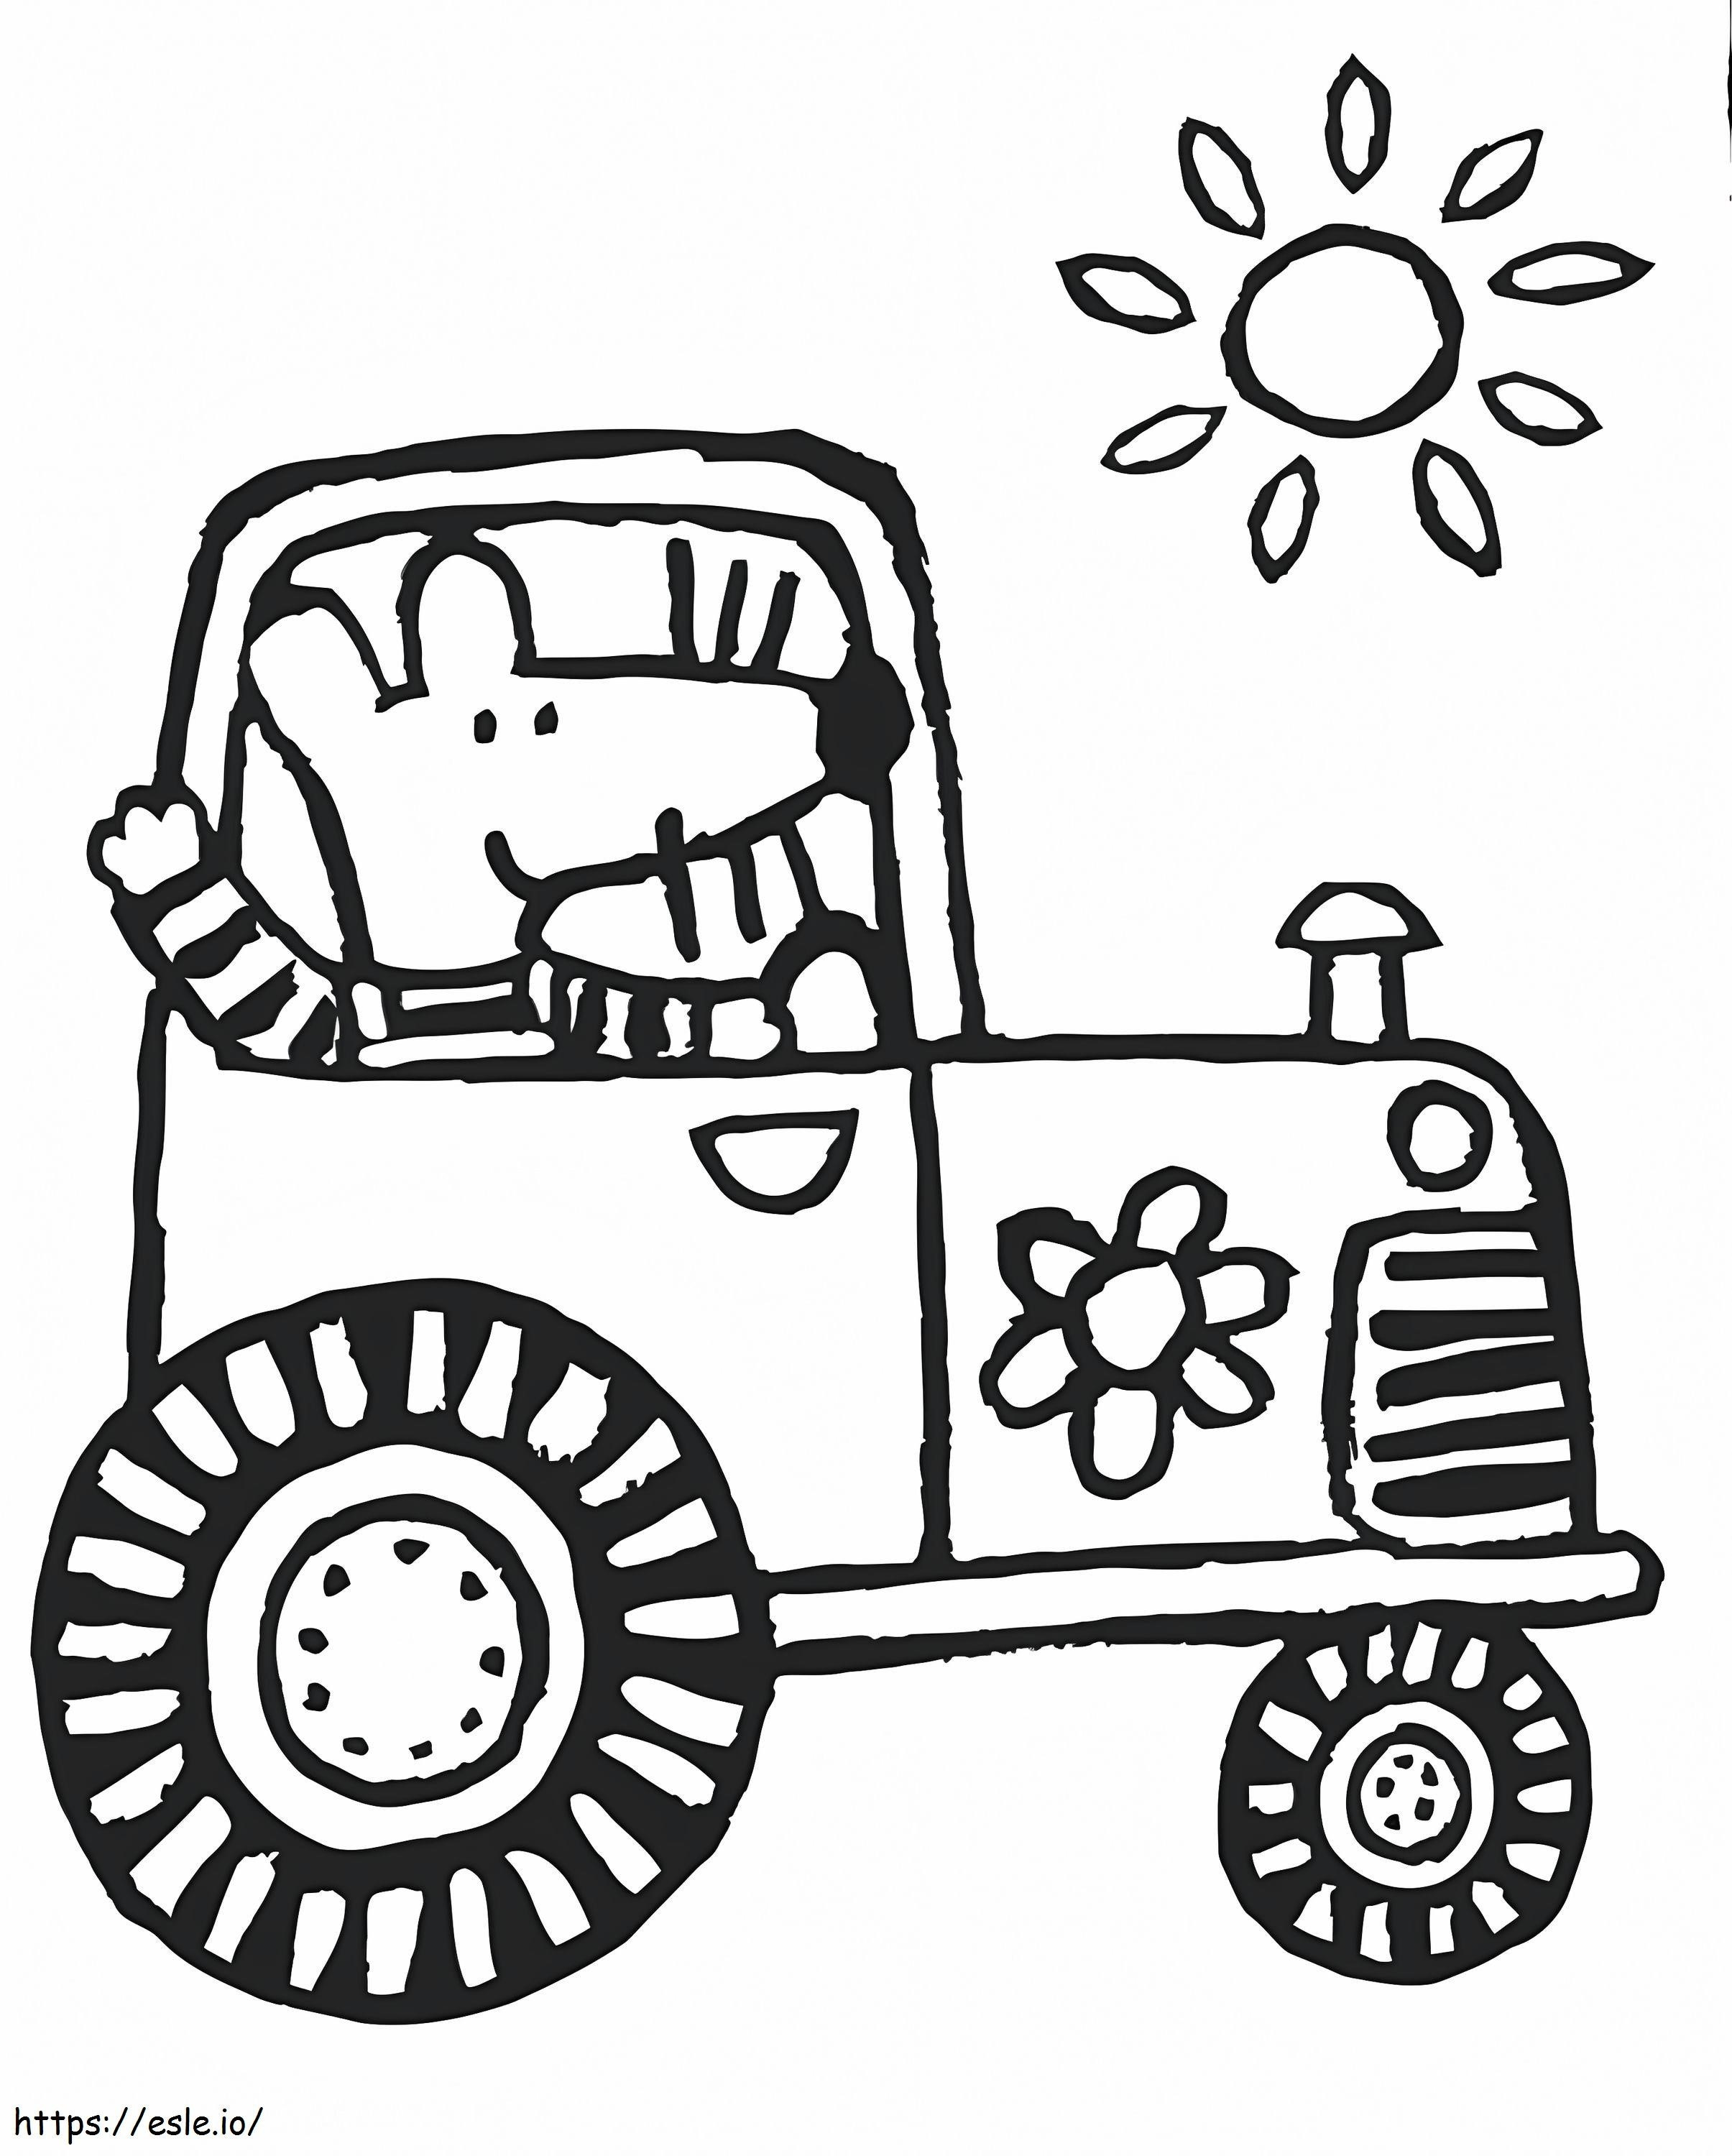 Maisy fahrender Traktor ausmalbilder